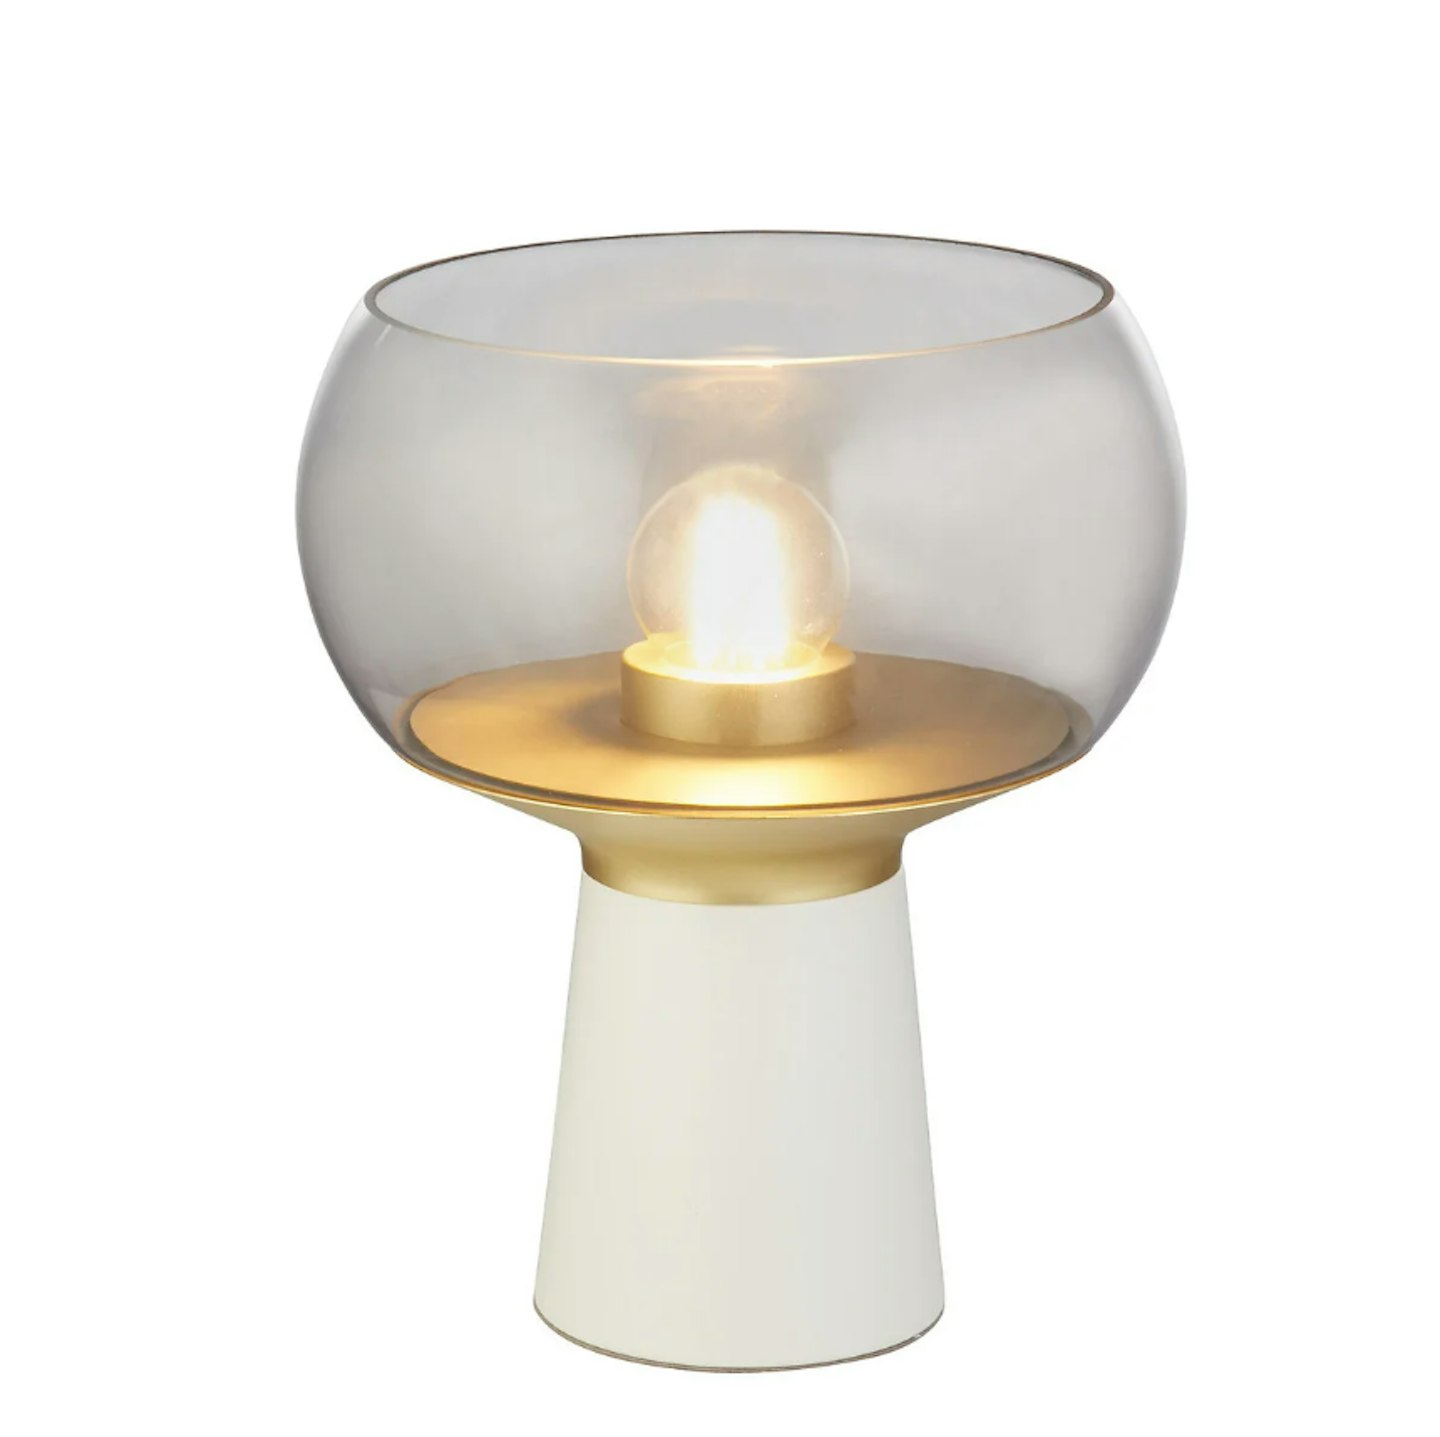 La Redoute Mushroom Shaped Glass Table Lamp